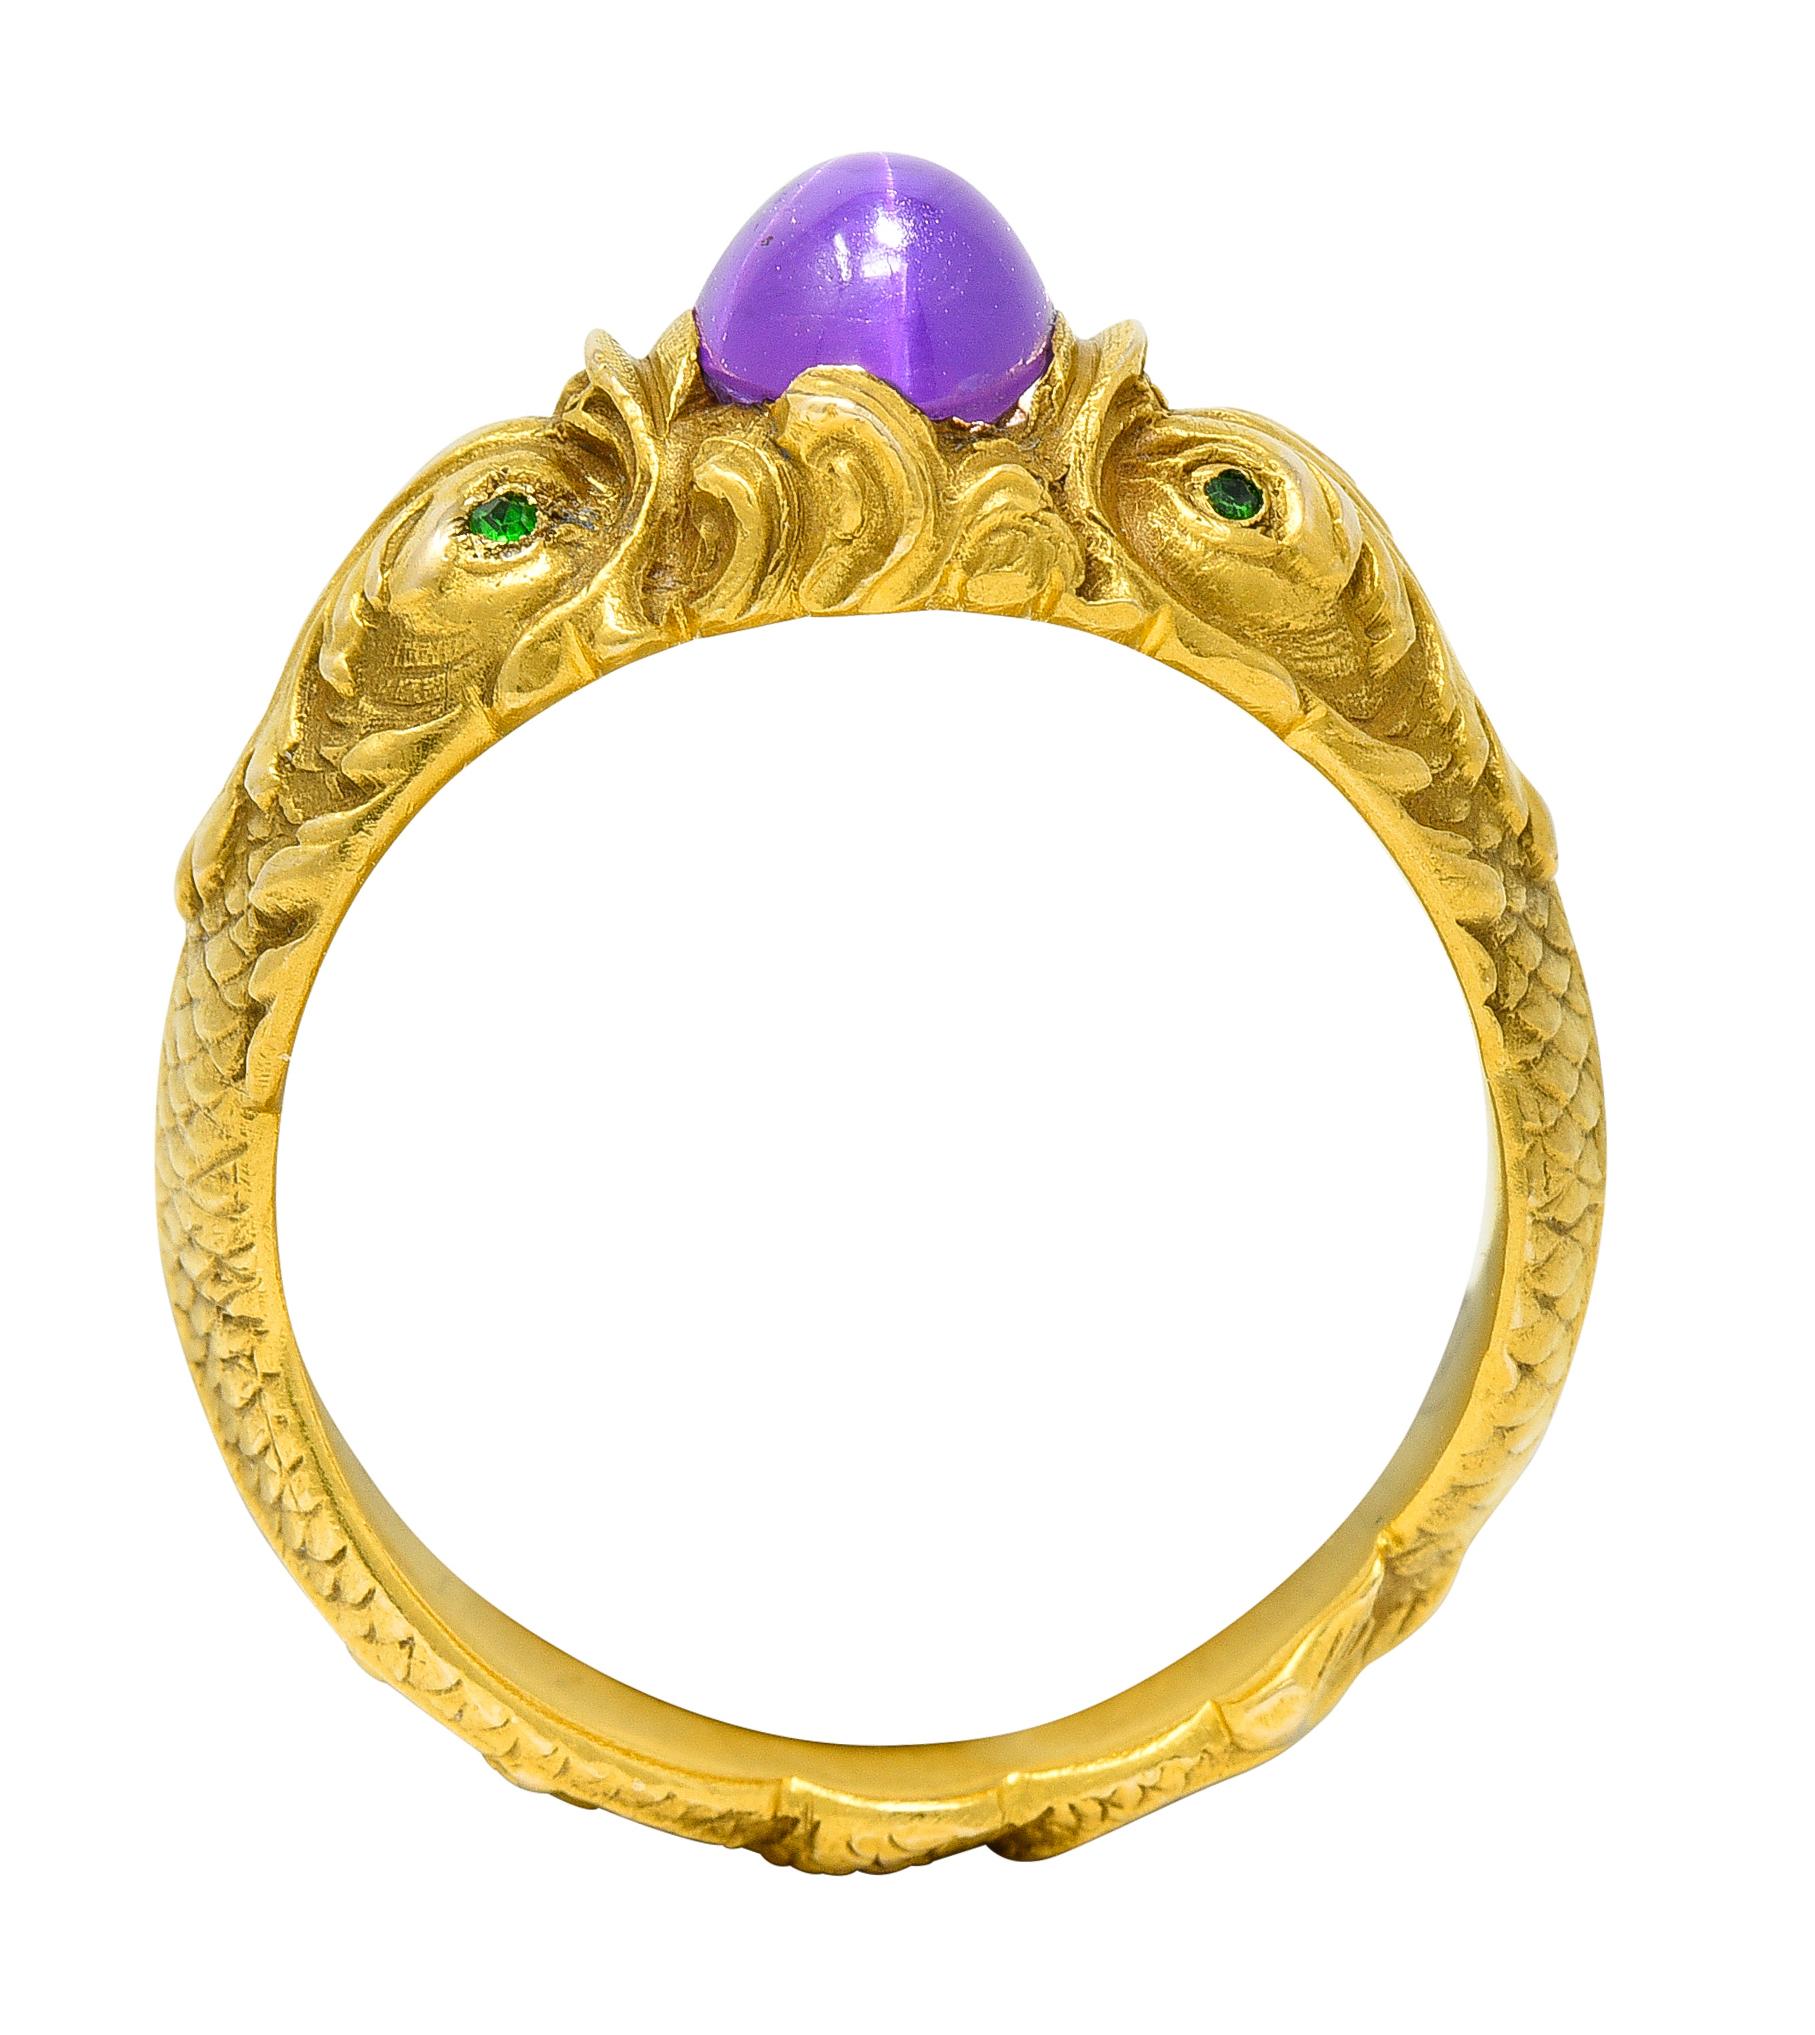 1890s Art Nouveau 2.68 Star Ruby Demantoid Garnet 14 Karat Gold Koi Fish Ring For Sale 3